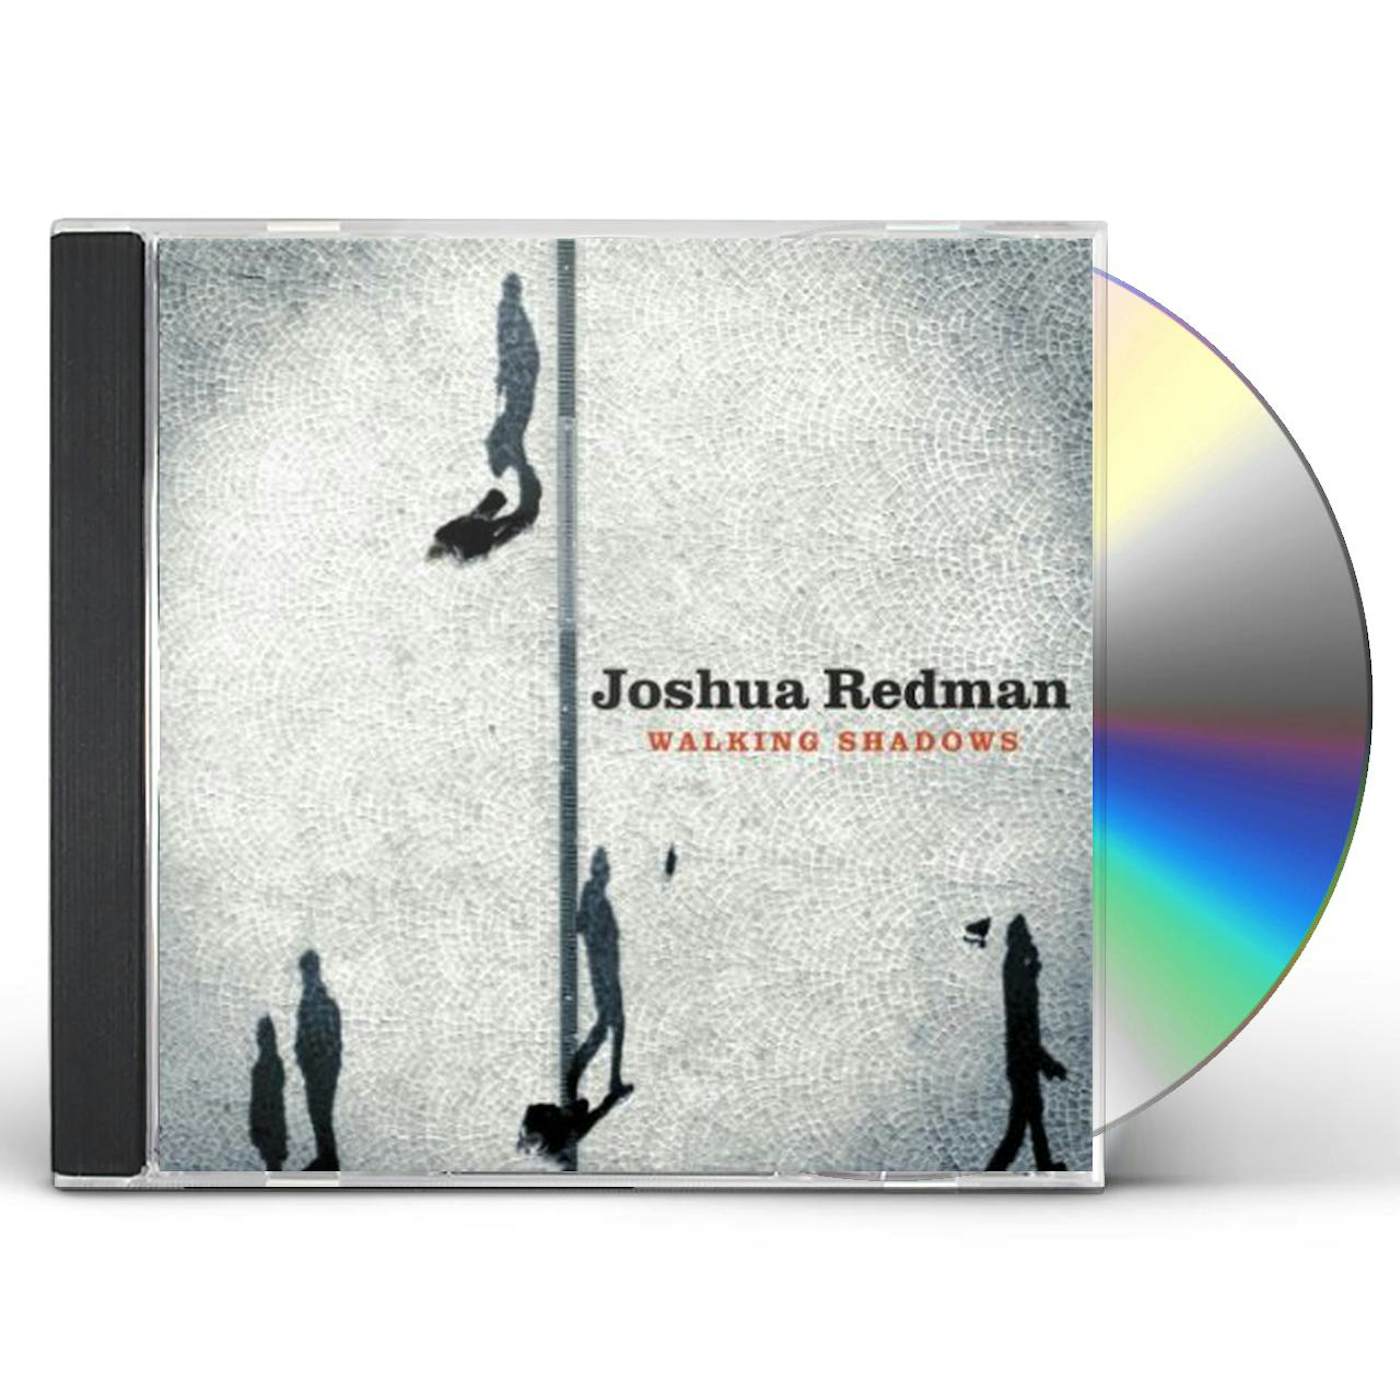 Joshua Redman WALKING SHADOWS CD